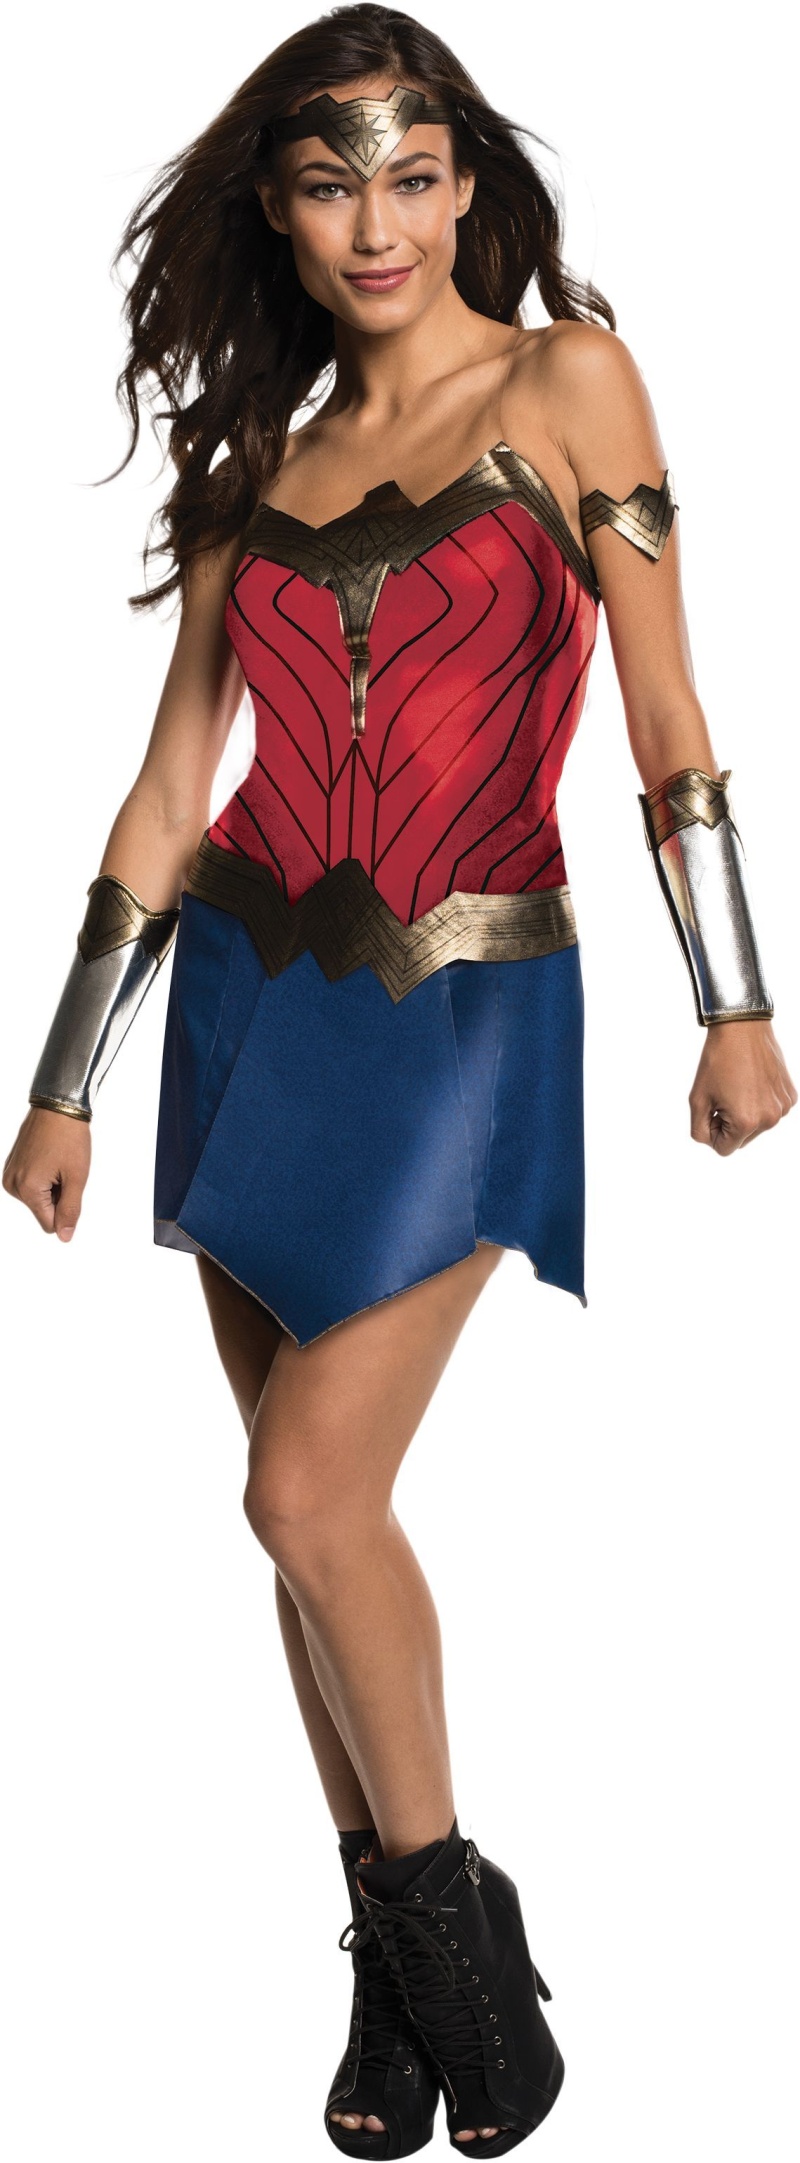 Wonder Woman Costume Large